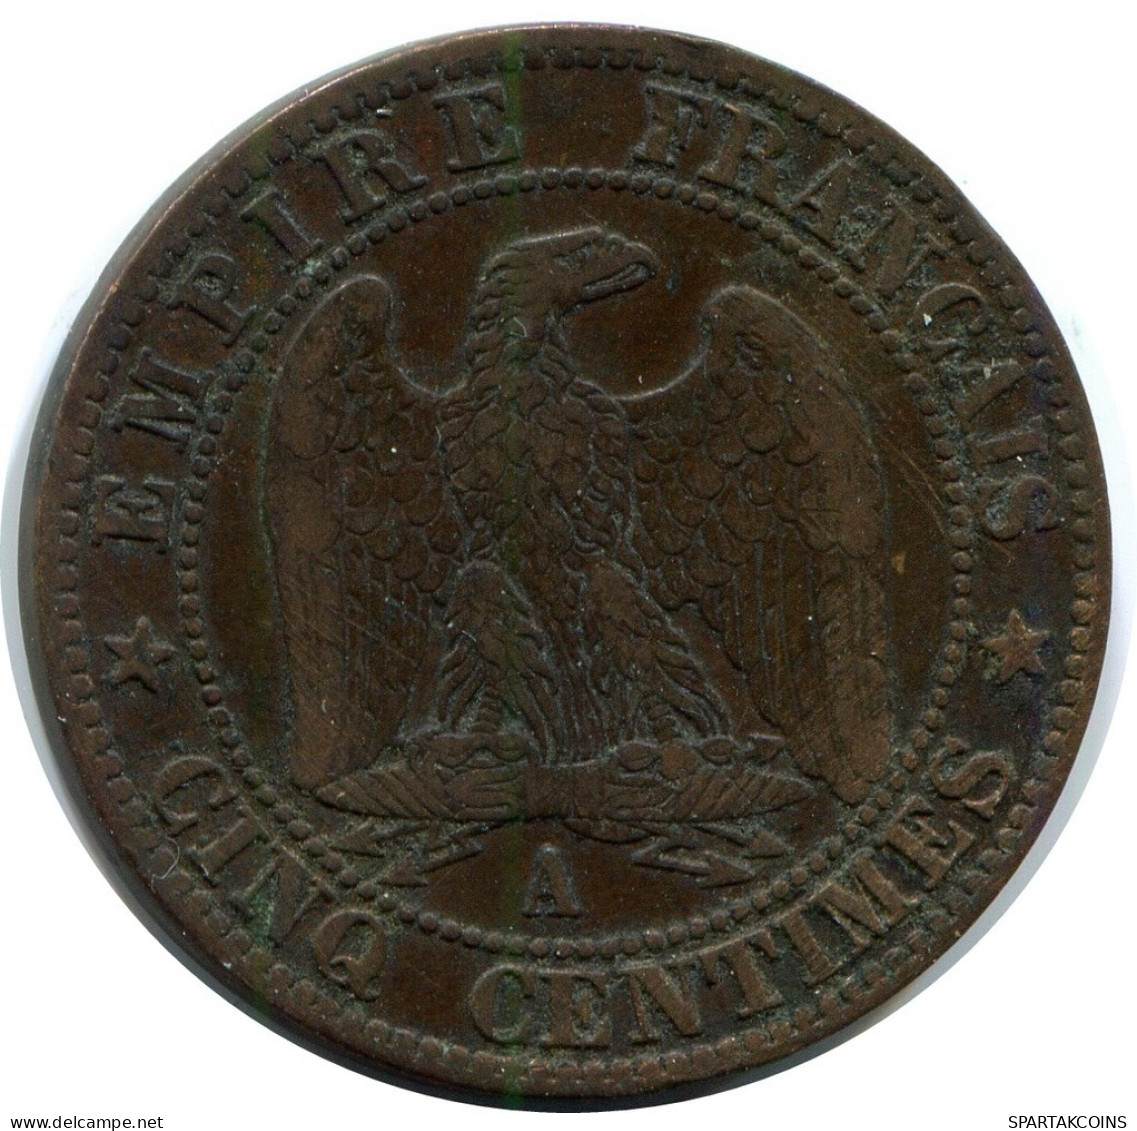 5 CENTIMES 1853 A FRANCE Coin Napoleon III #AZ846.U.A - 5 Centimes